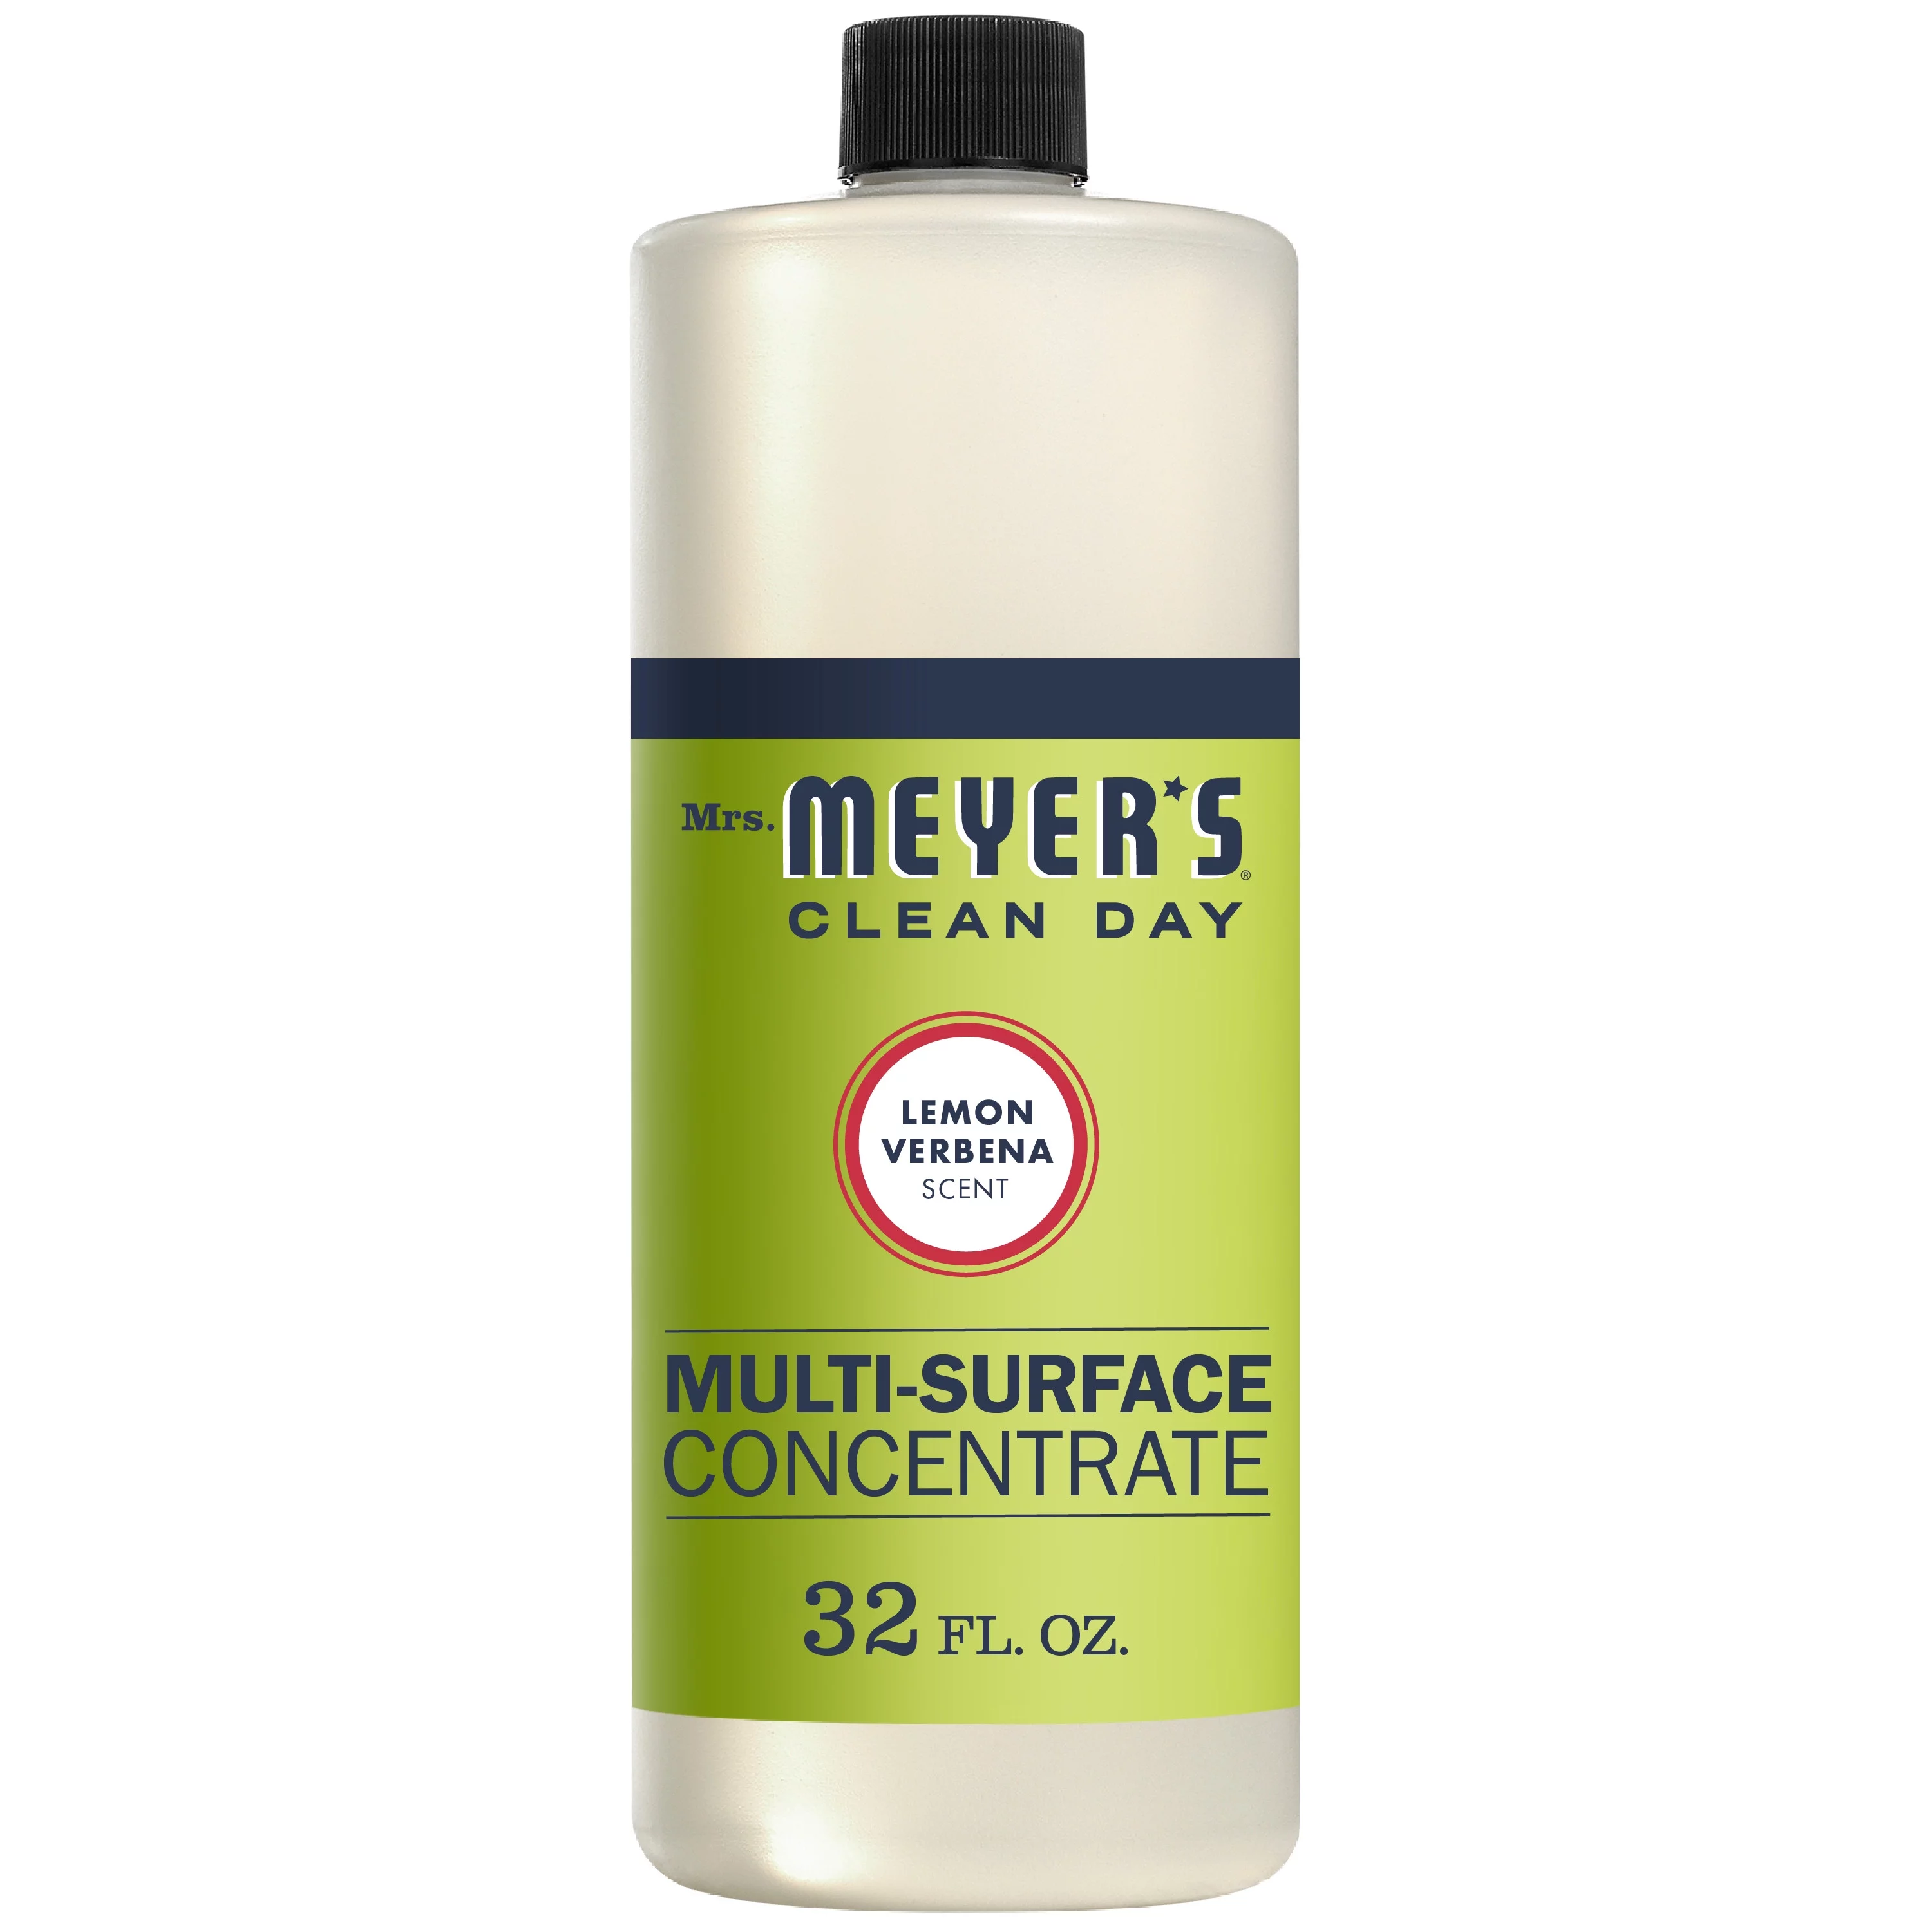 Mrs. Meyer's Clean Day Multi-Surface Cleaner Concentrate, Lemon Verbena Scent, 32 fl oz